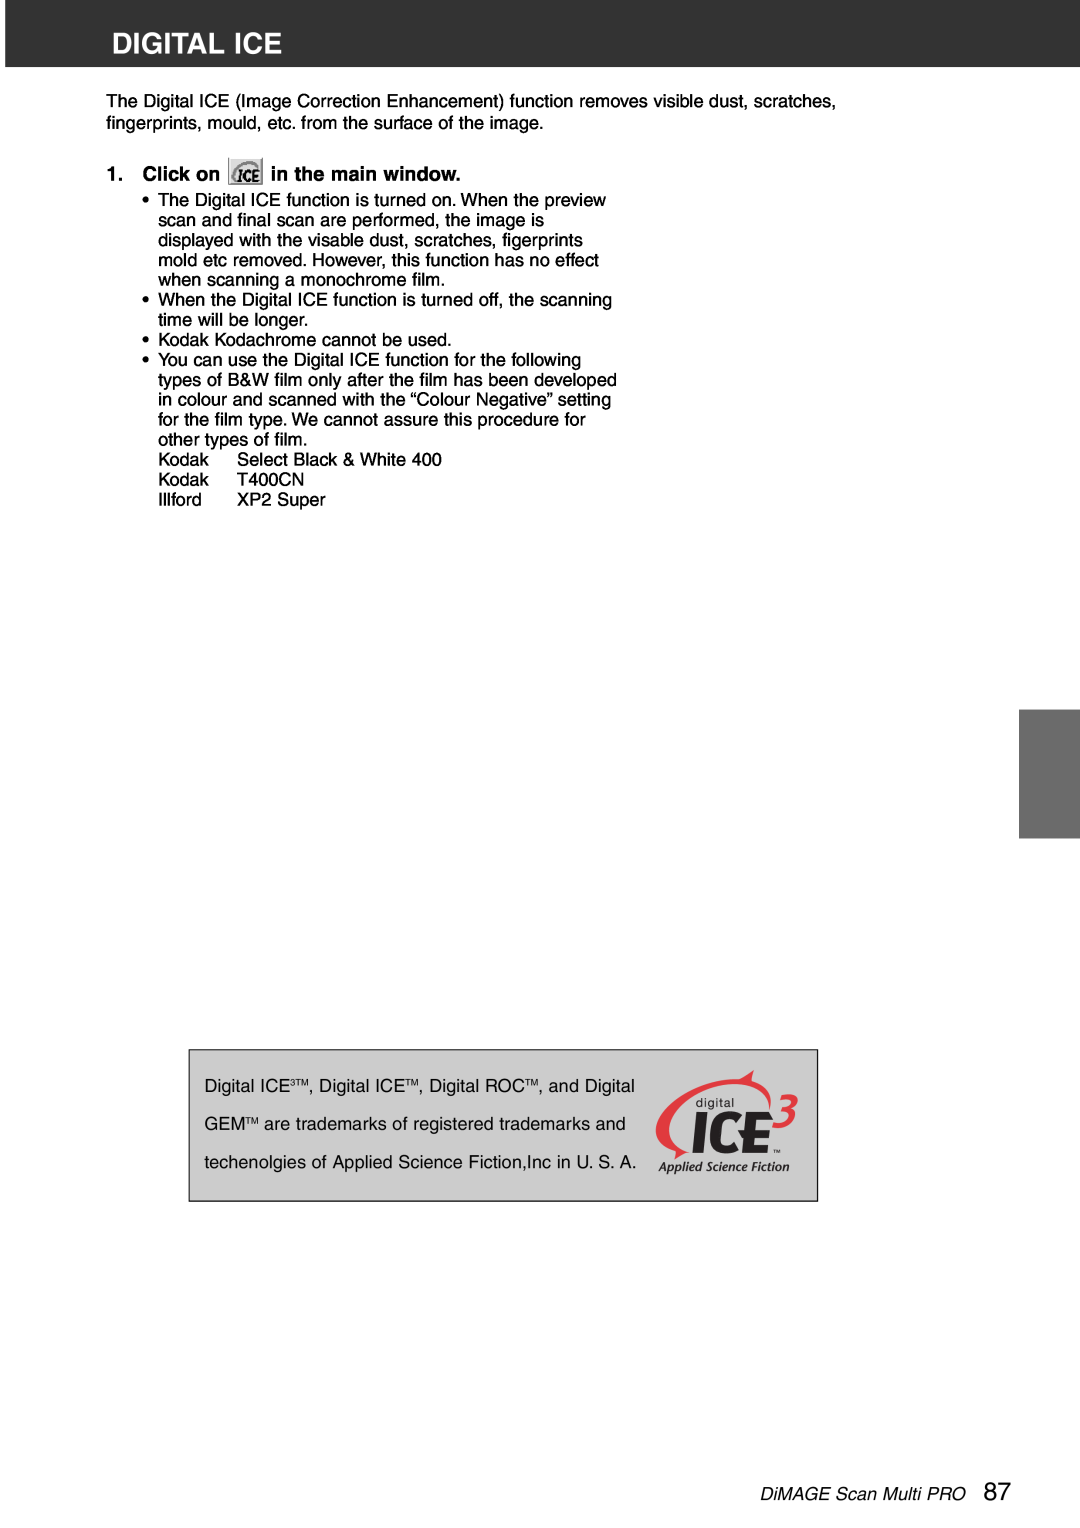 Konica Minolta instruction manual Digital Ice, Click on in the main window, DiMAGE Scan Multi PRO 